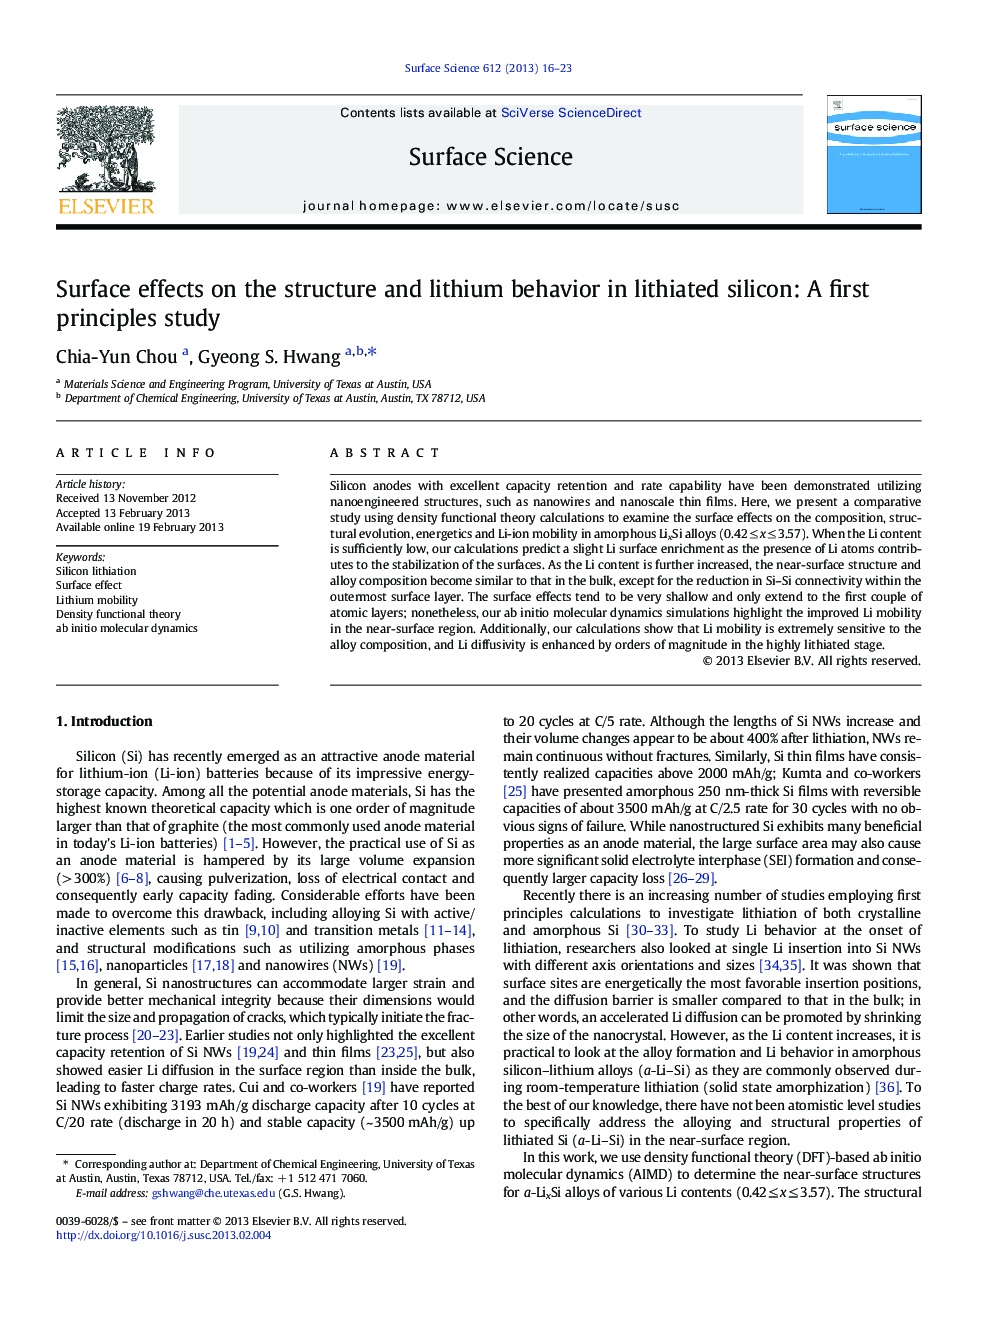 اثرات سطحی بر ساختار و رفتار لیتیوم در سیلیکون لیتیوم: مطالعه اصول اولیه 